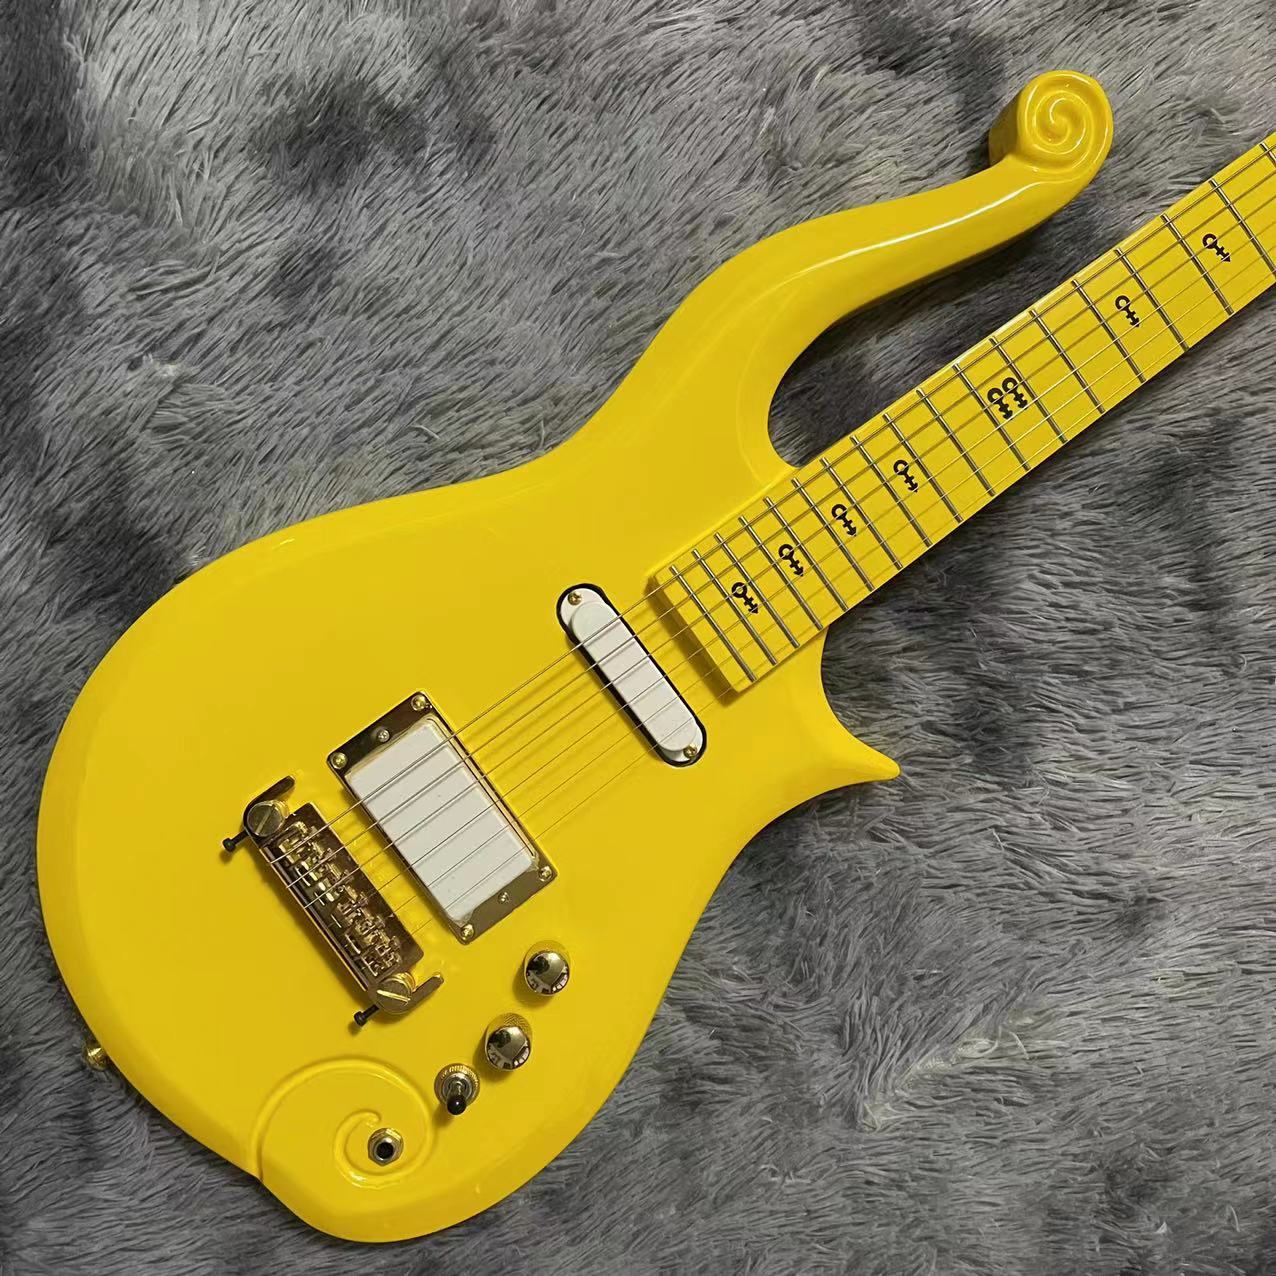 Anpassad Maple Fingerboard Neck Mahogany Body Prince Cloud Electric Guitar med gul färg